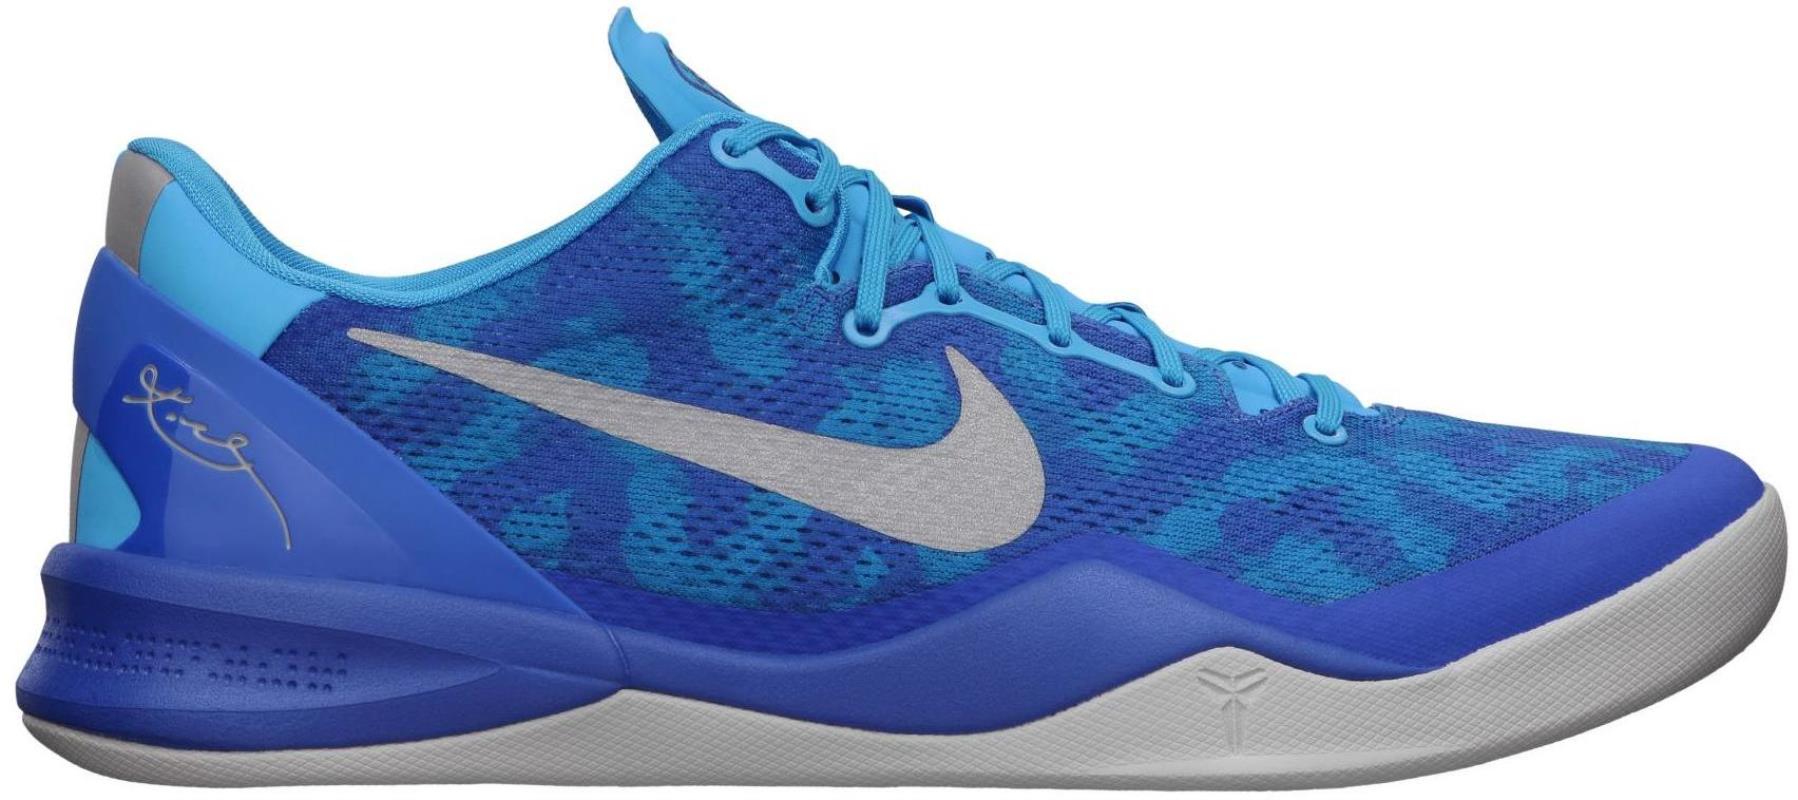 Nike Kobe 8 Blue Glow